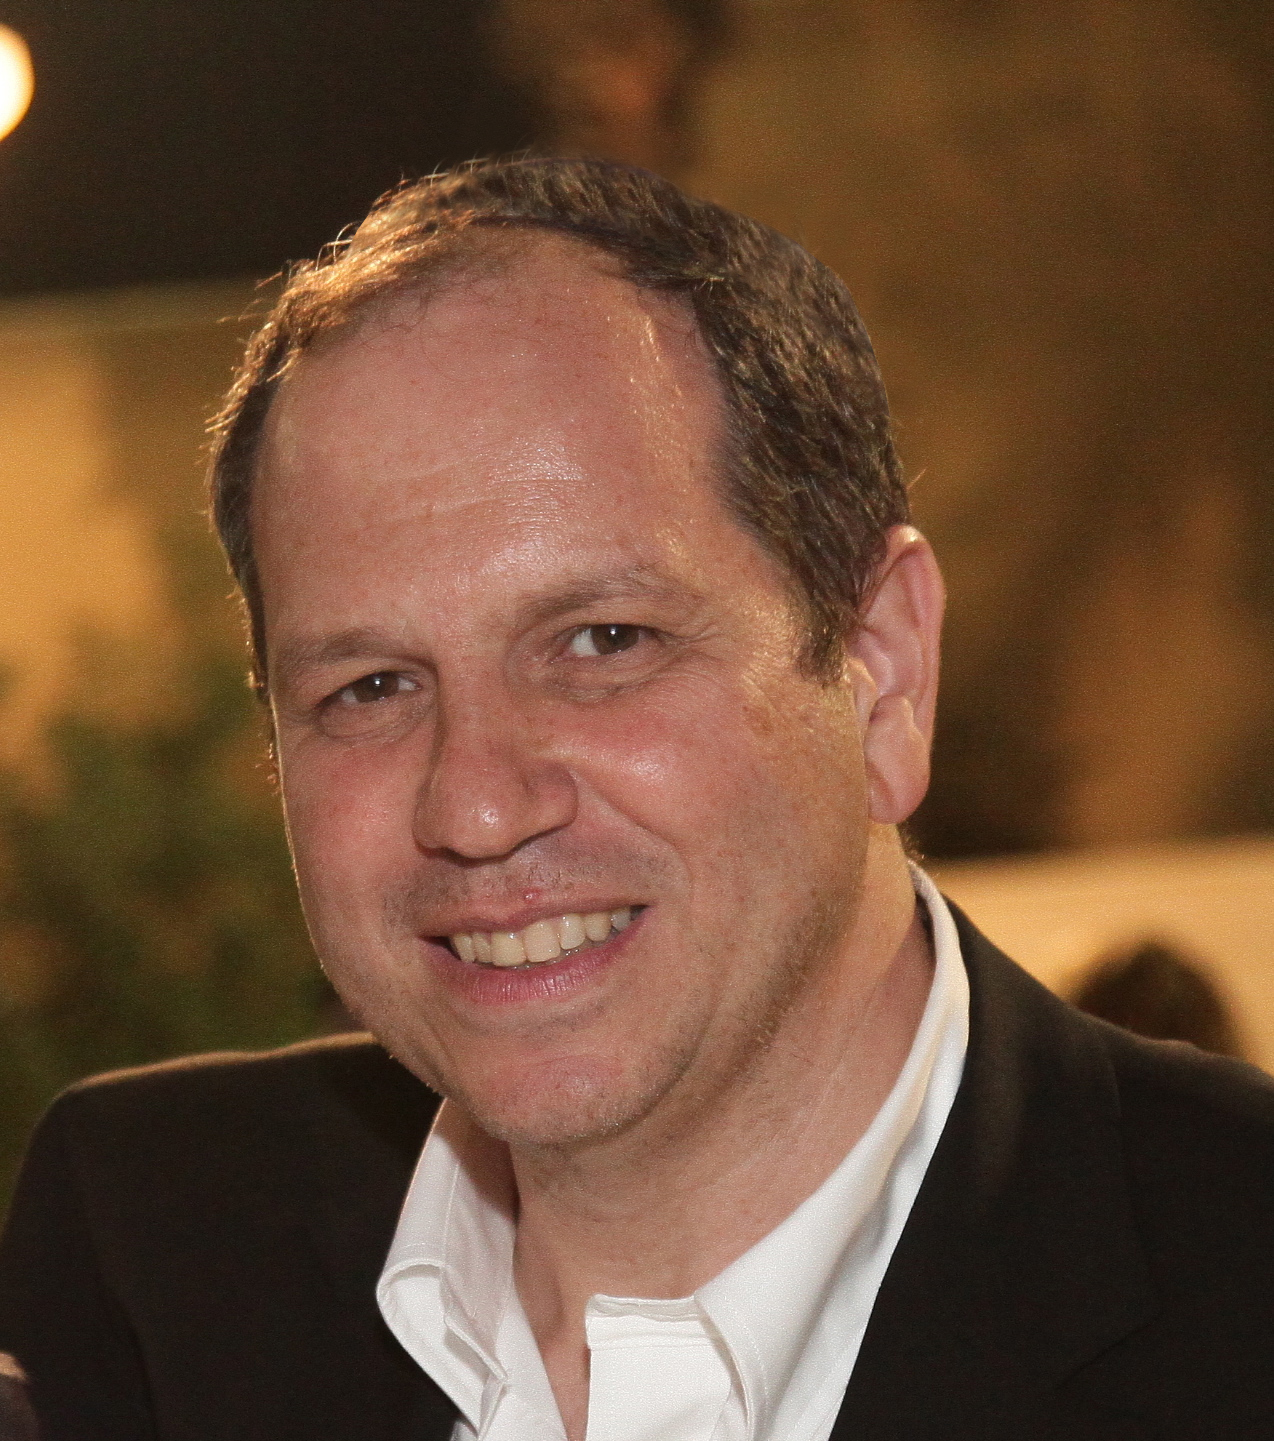 David Amselem, CEO of TvTak